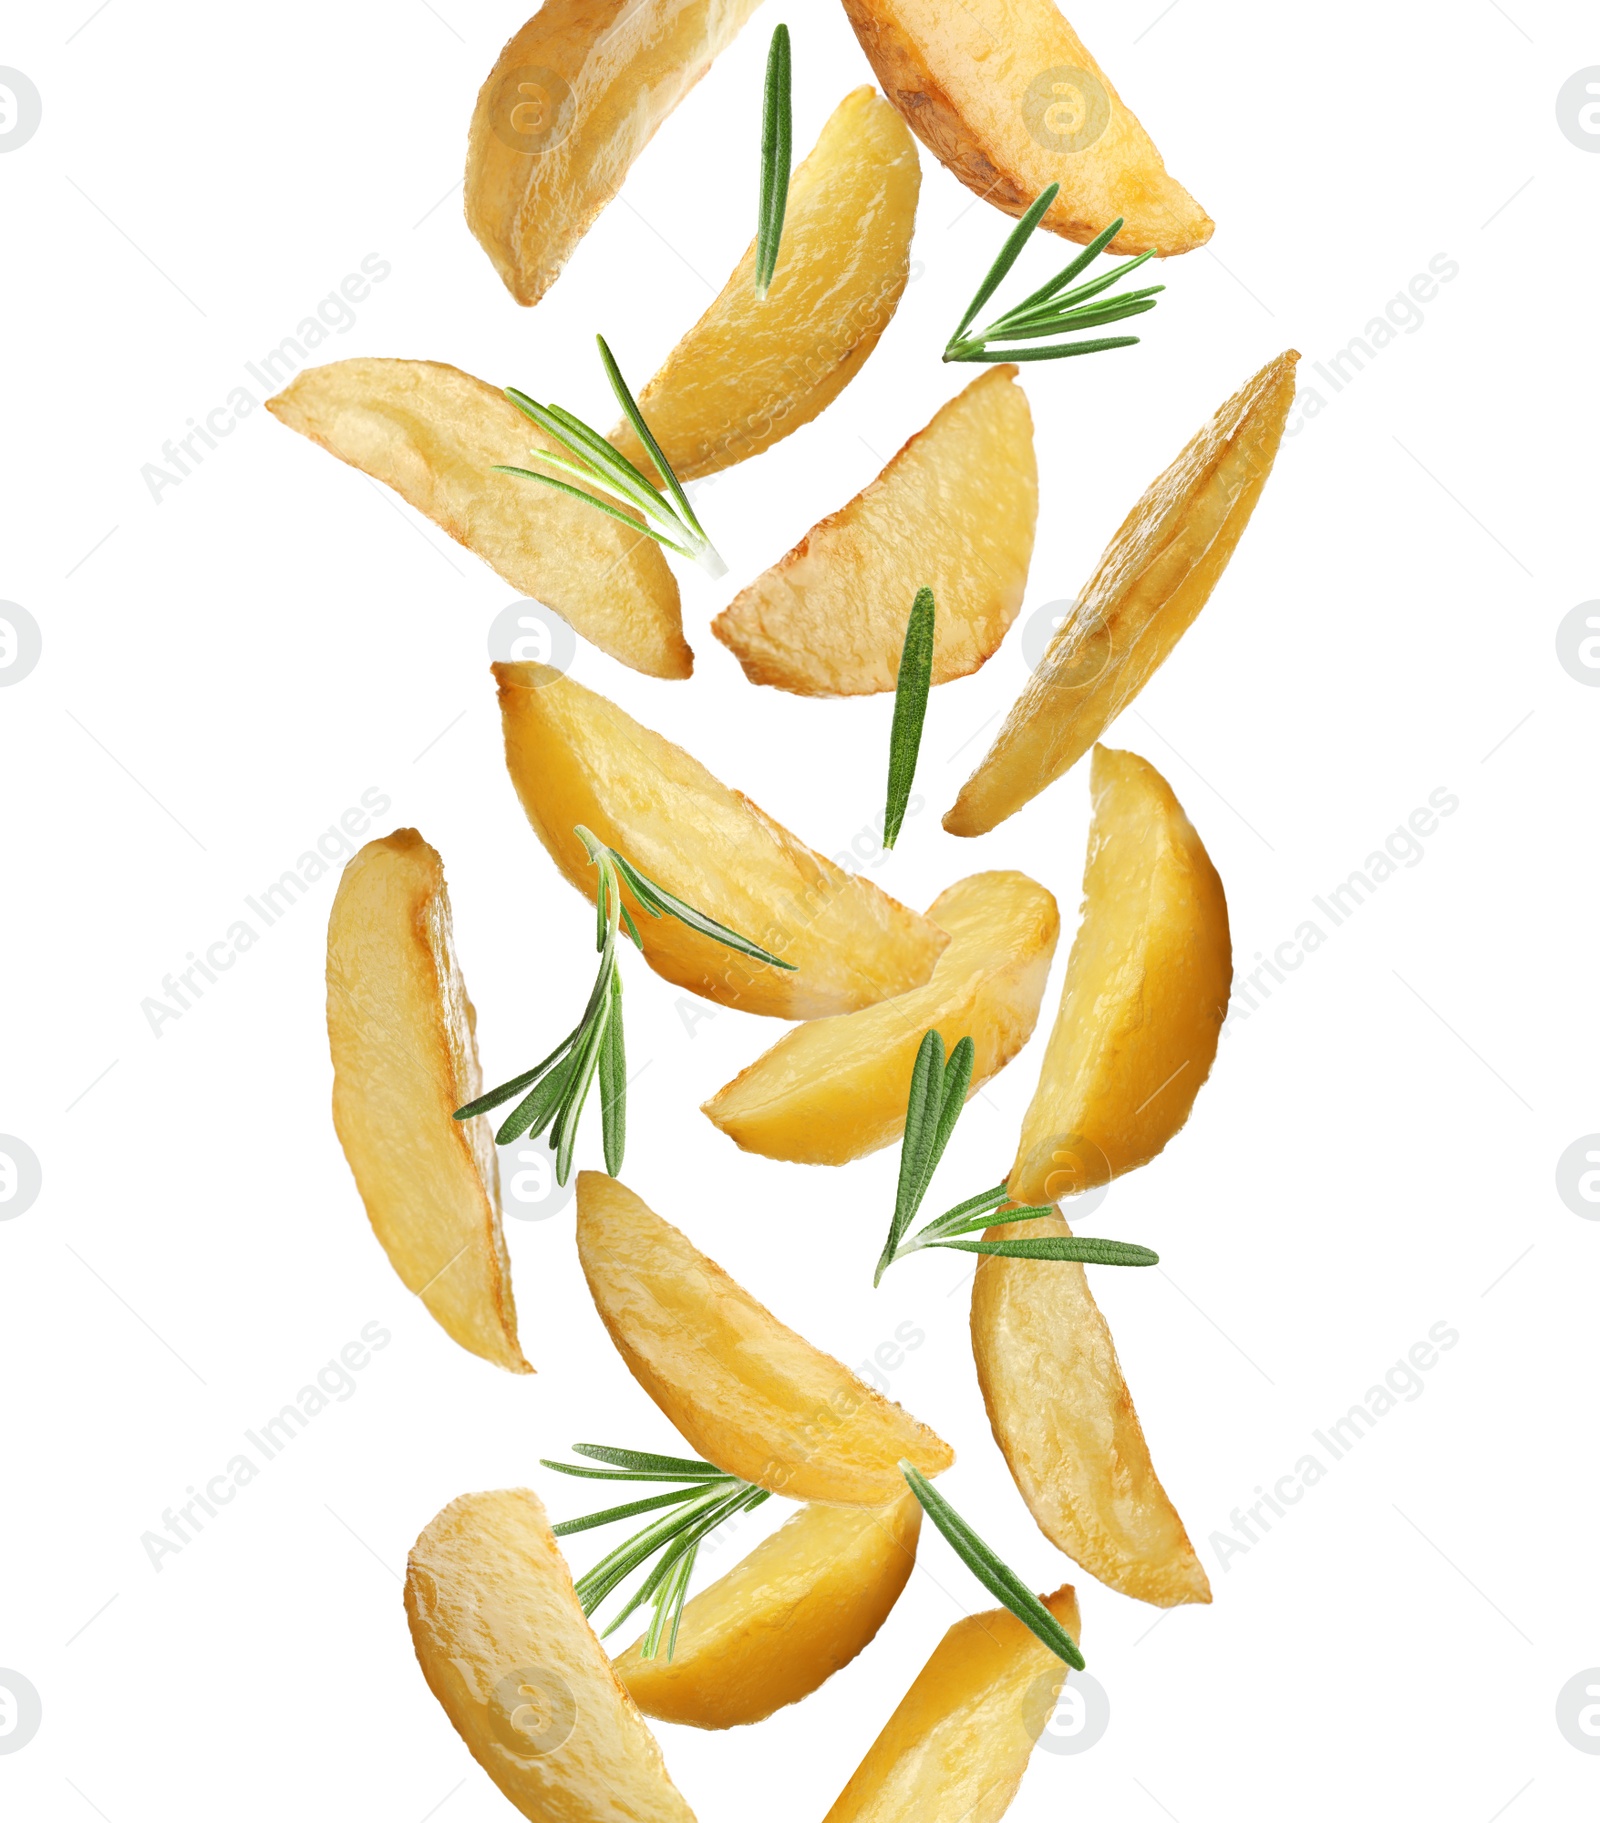 Image of Tasty baked potatoes and rosemary falling on white background